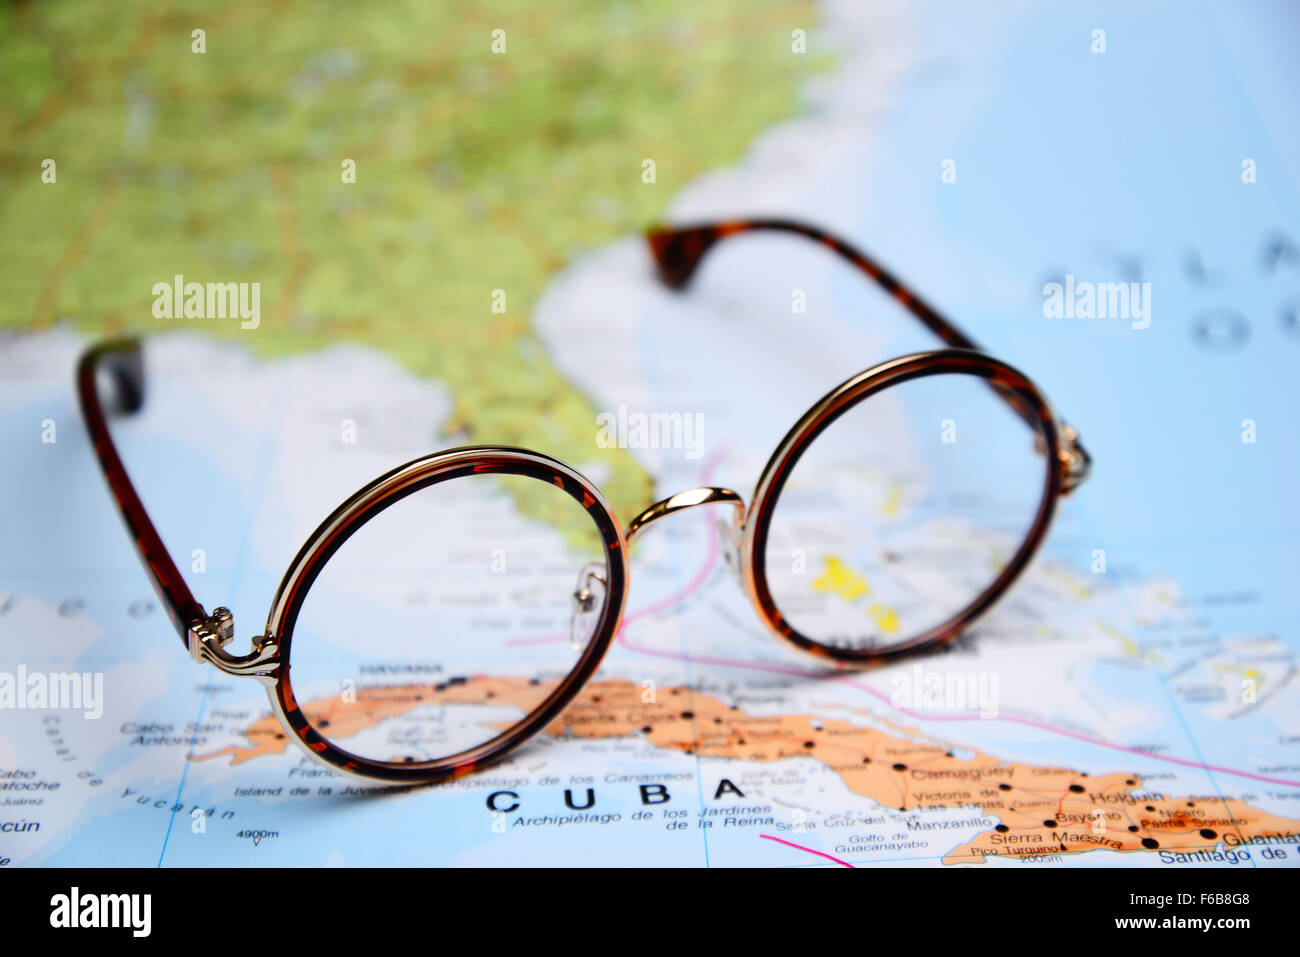 Glasses on a map - Cuba Stock Photo